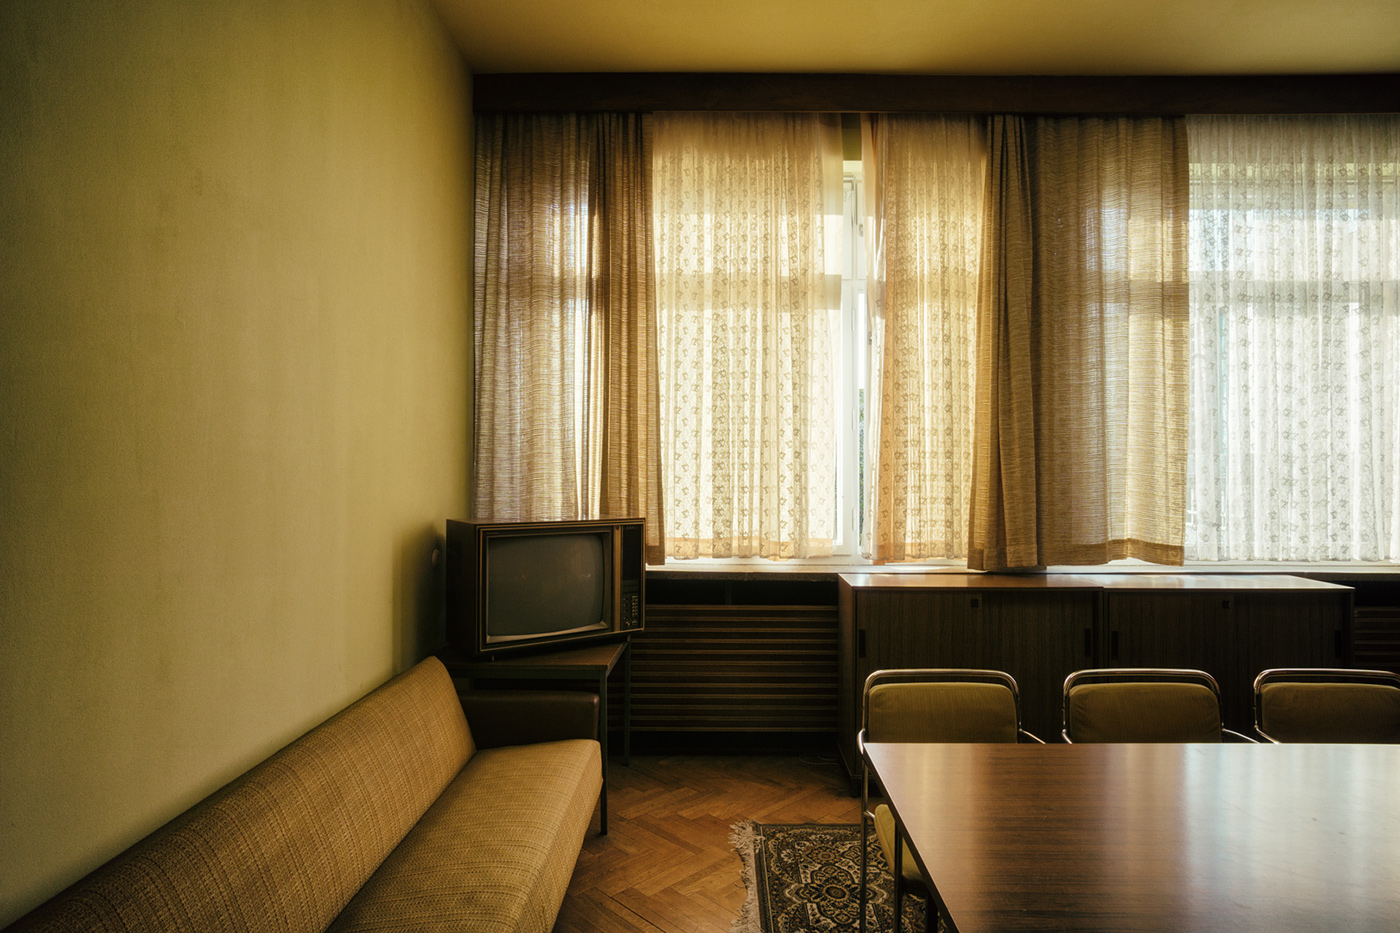 mielke erich museum Interior inside furniture GDR ddr nostalgia surveillance